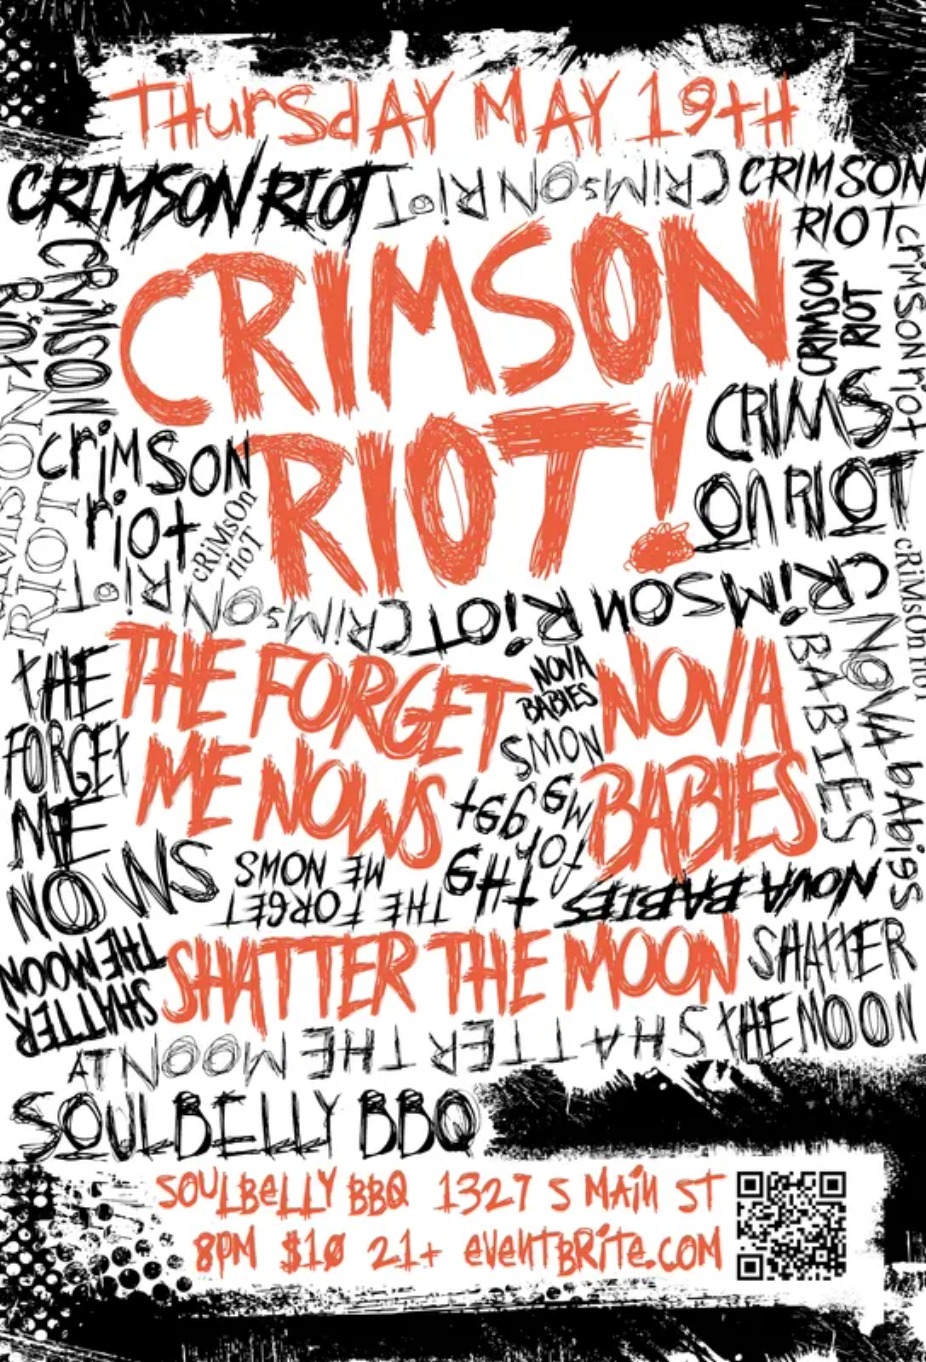 Pulsar Presents Crimson Riot, The Forget Me Nows, Nova Babies, Shatter The Moon event photo